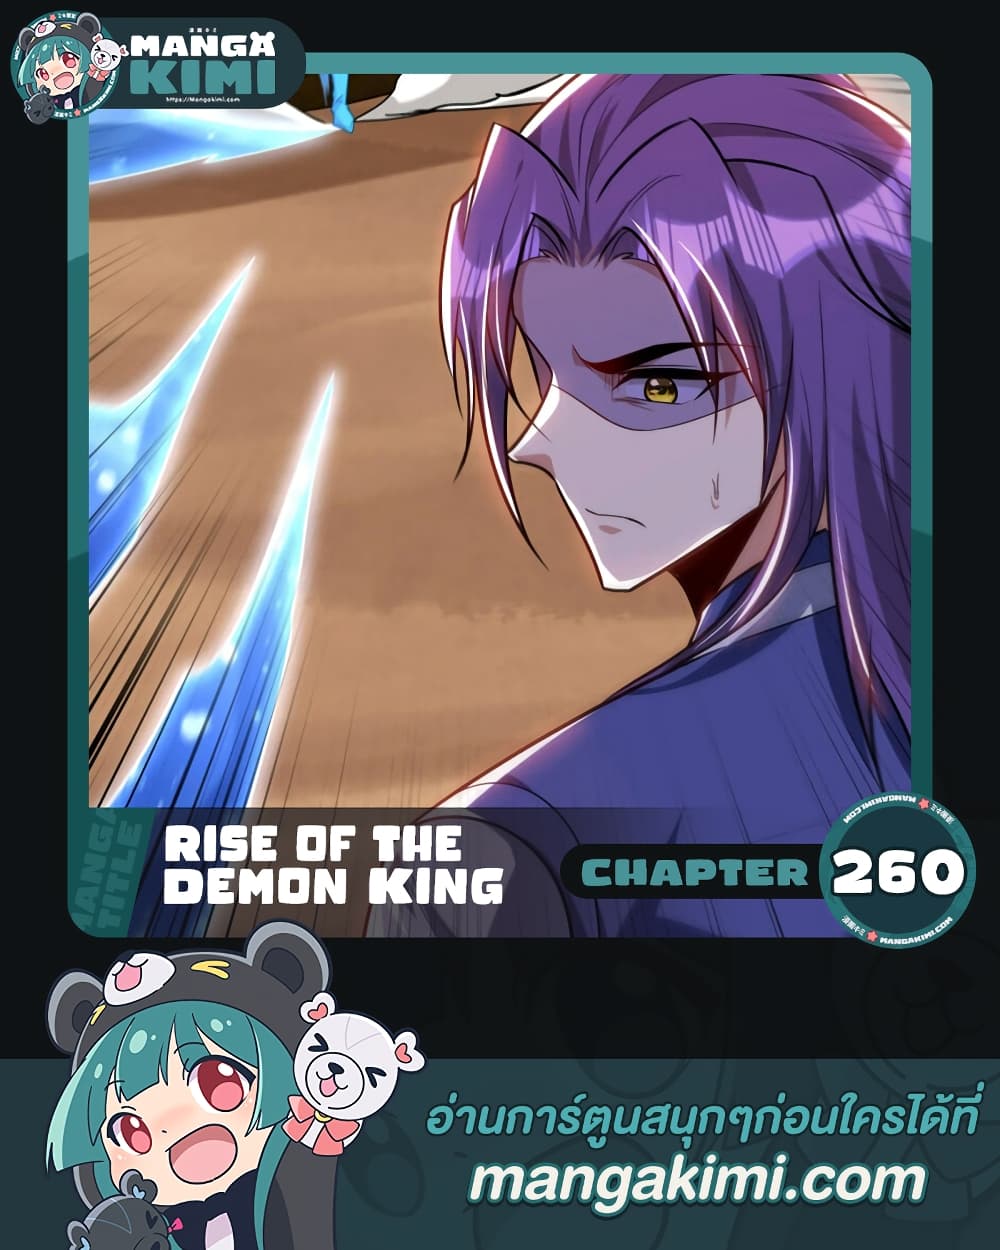 Rise of The Demon King รุ่งอรุณแห่งราชาปีศาจ ตอนที่ 260 (1)